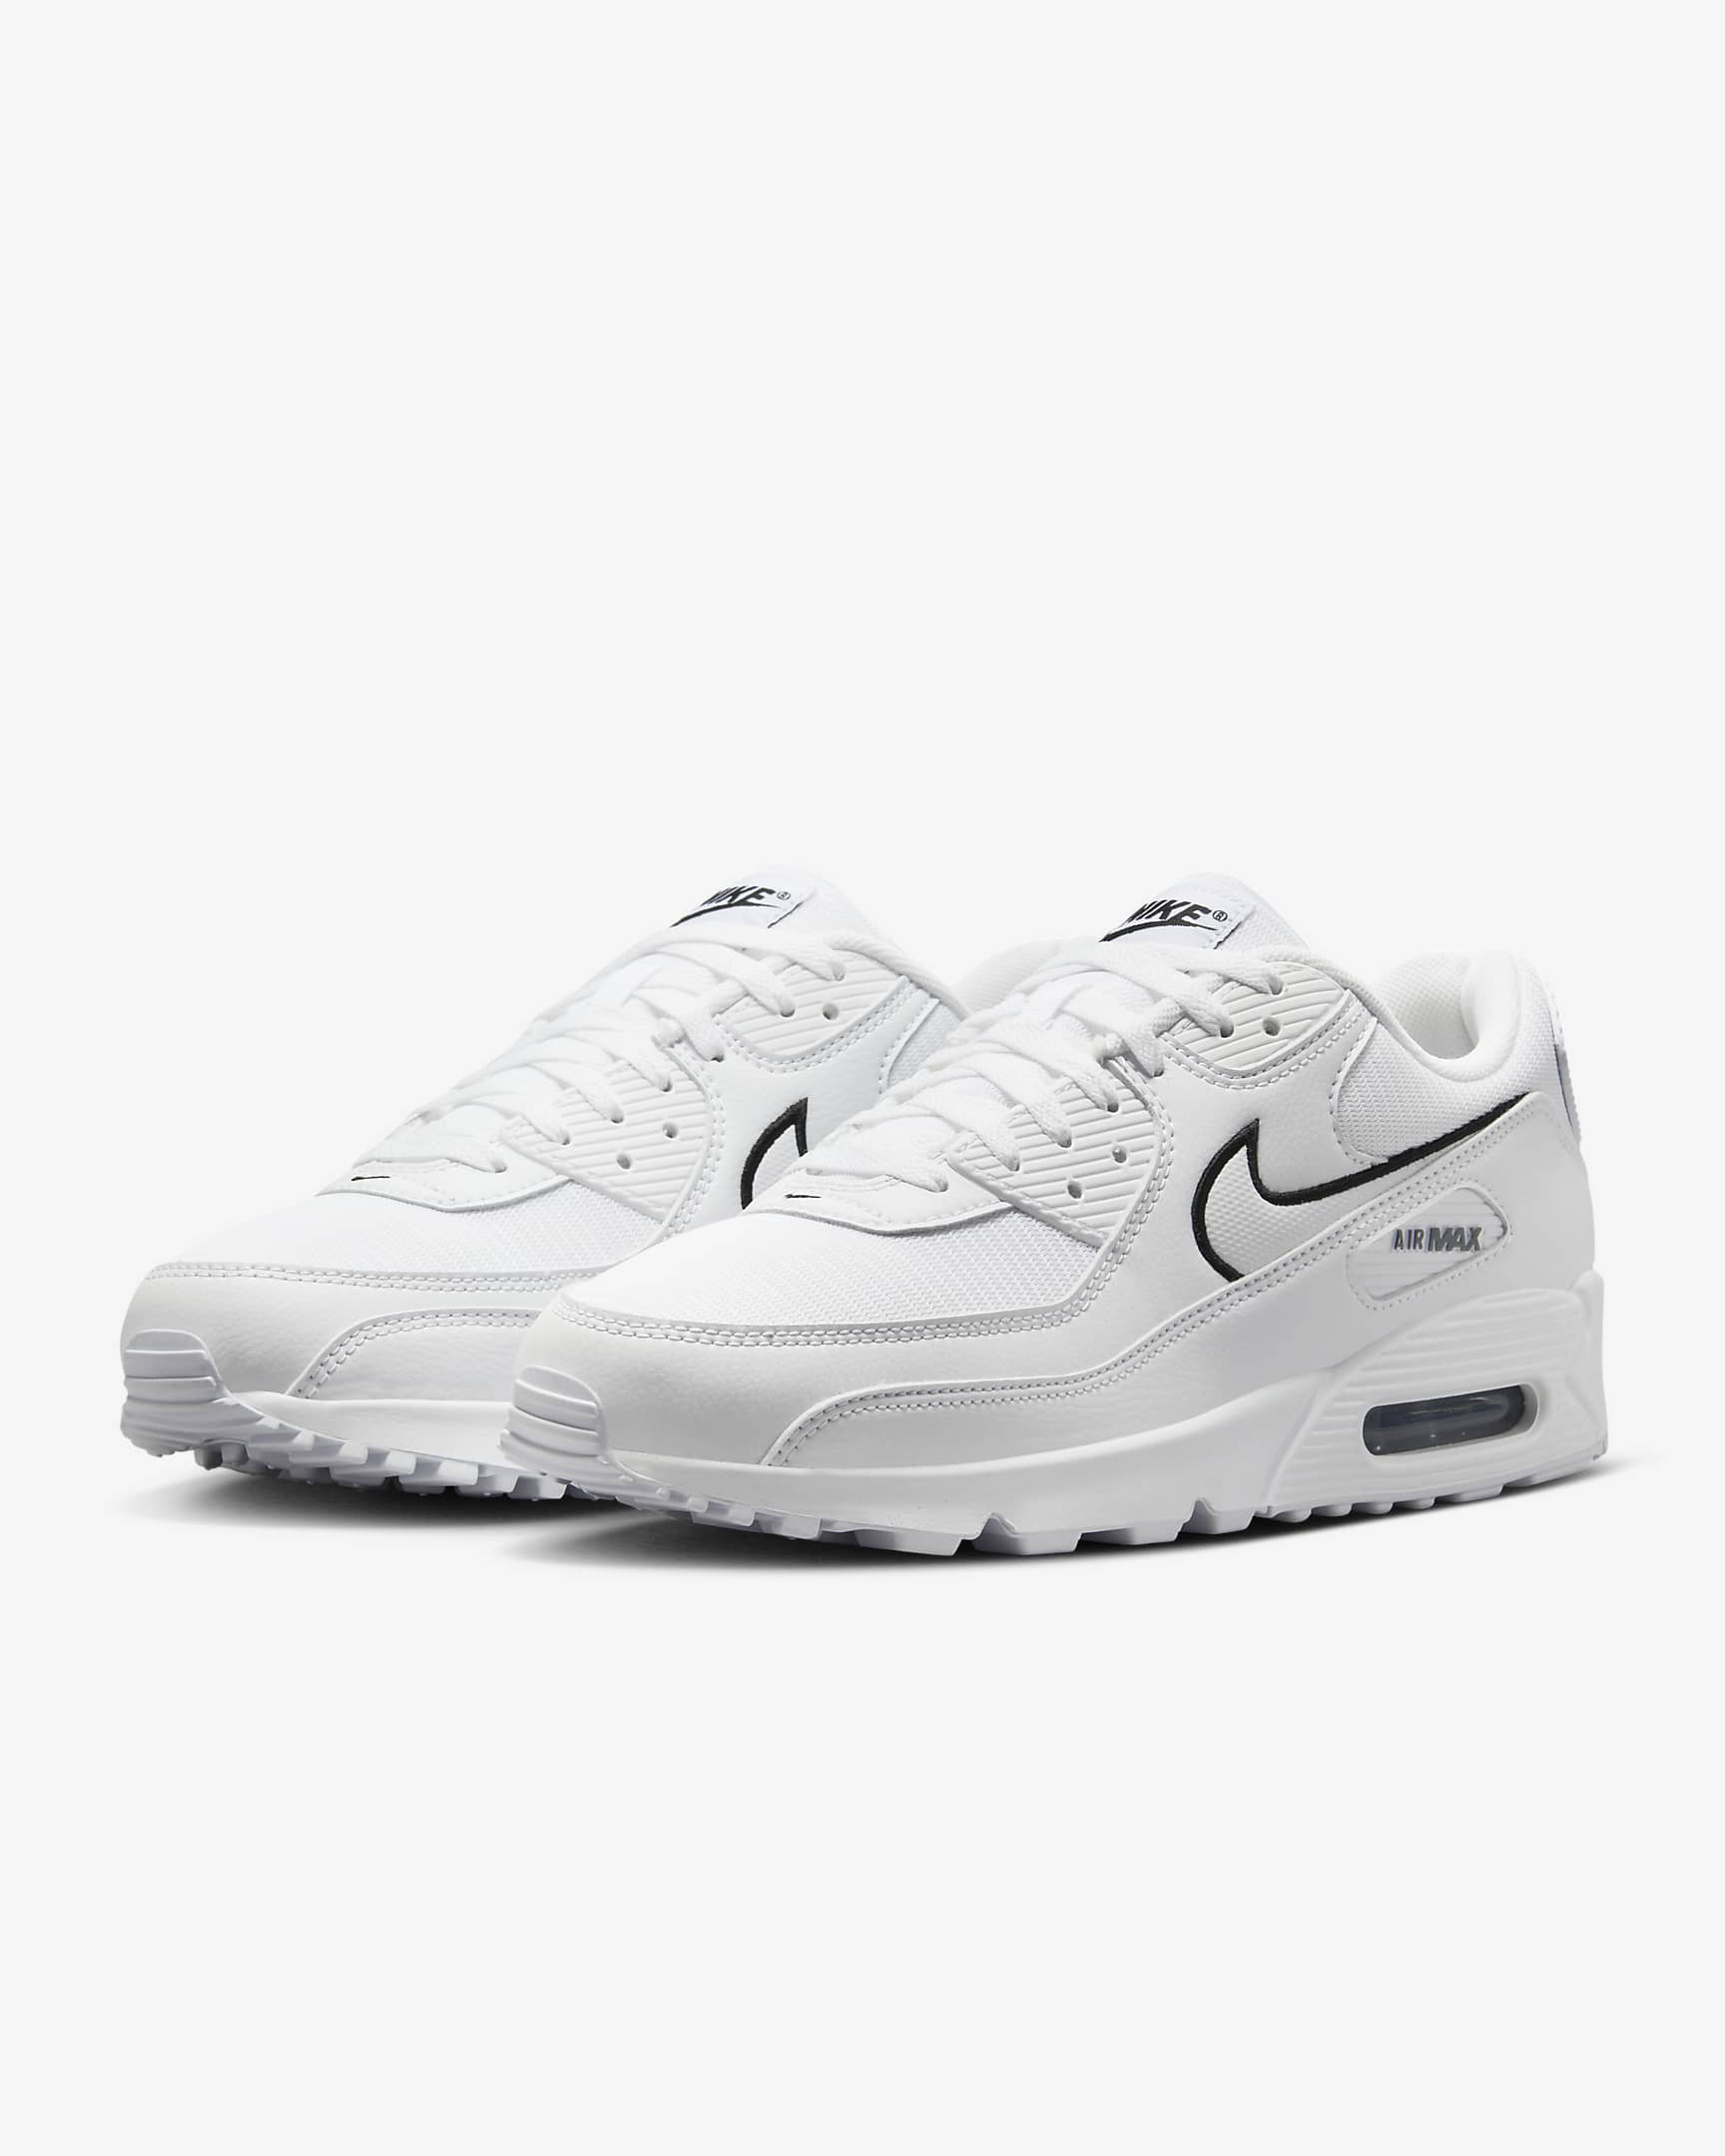 Nike Air Max 90 Men's Shoes - White/Black